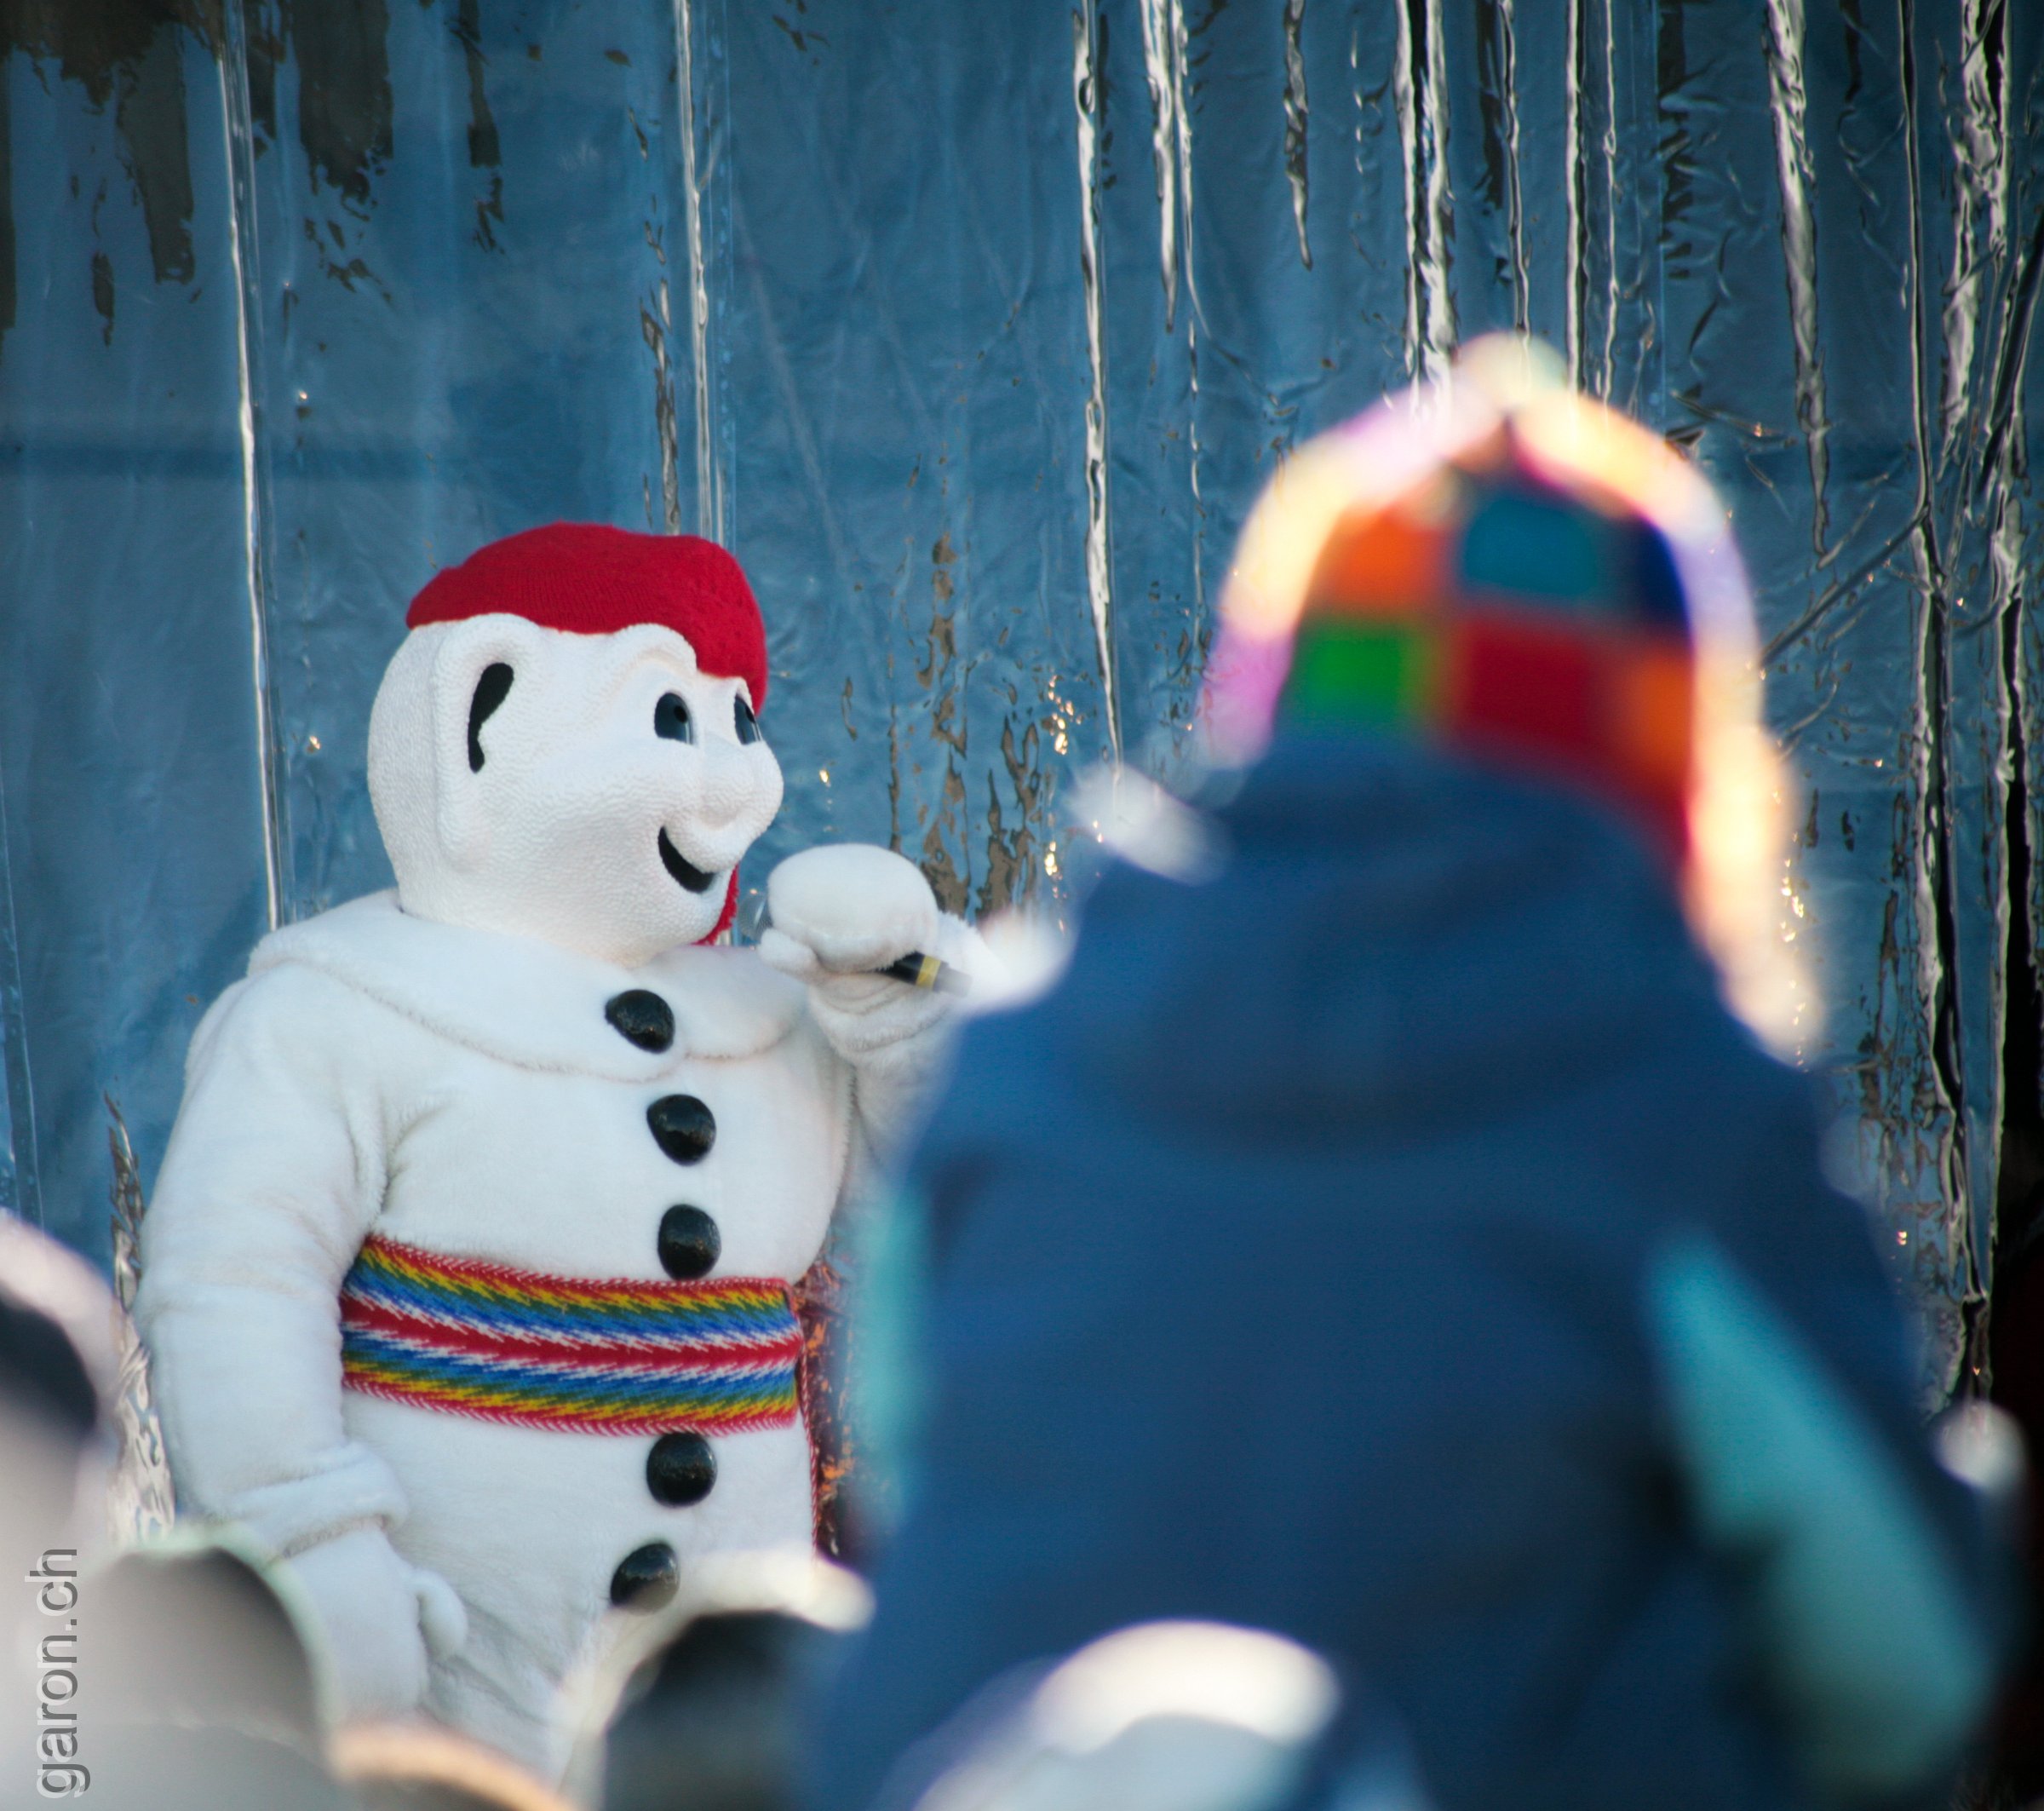 Québec, Carnaval Child admires Bonhomme Carnaval, the mascot of Carnival season